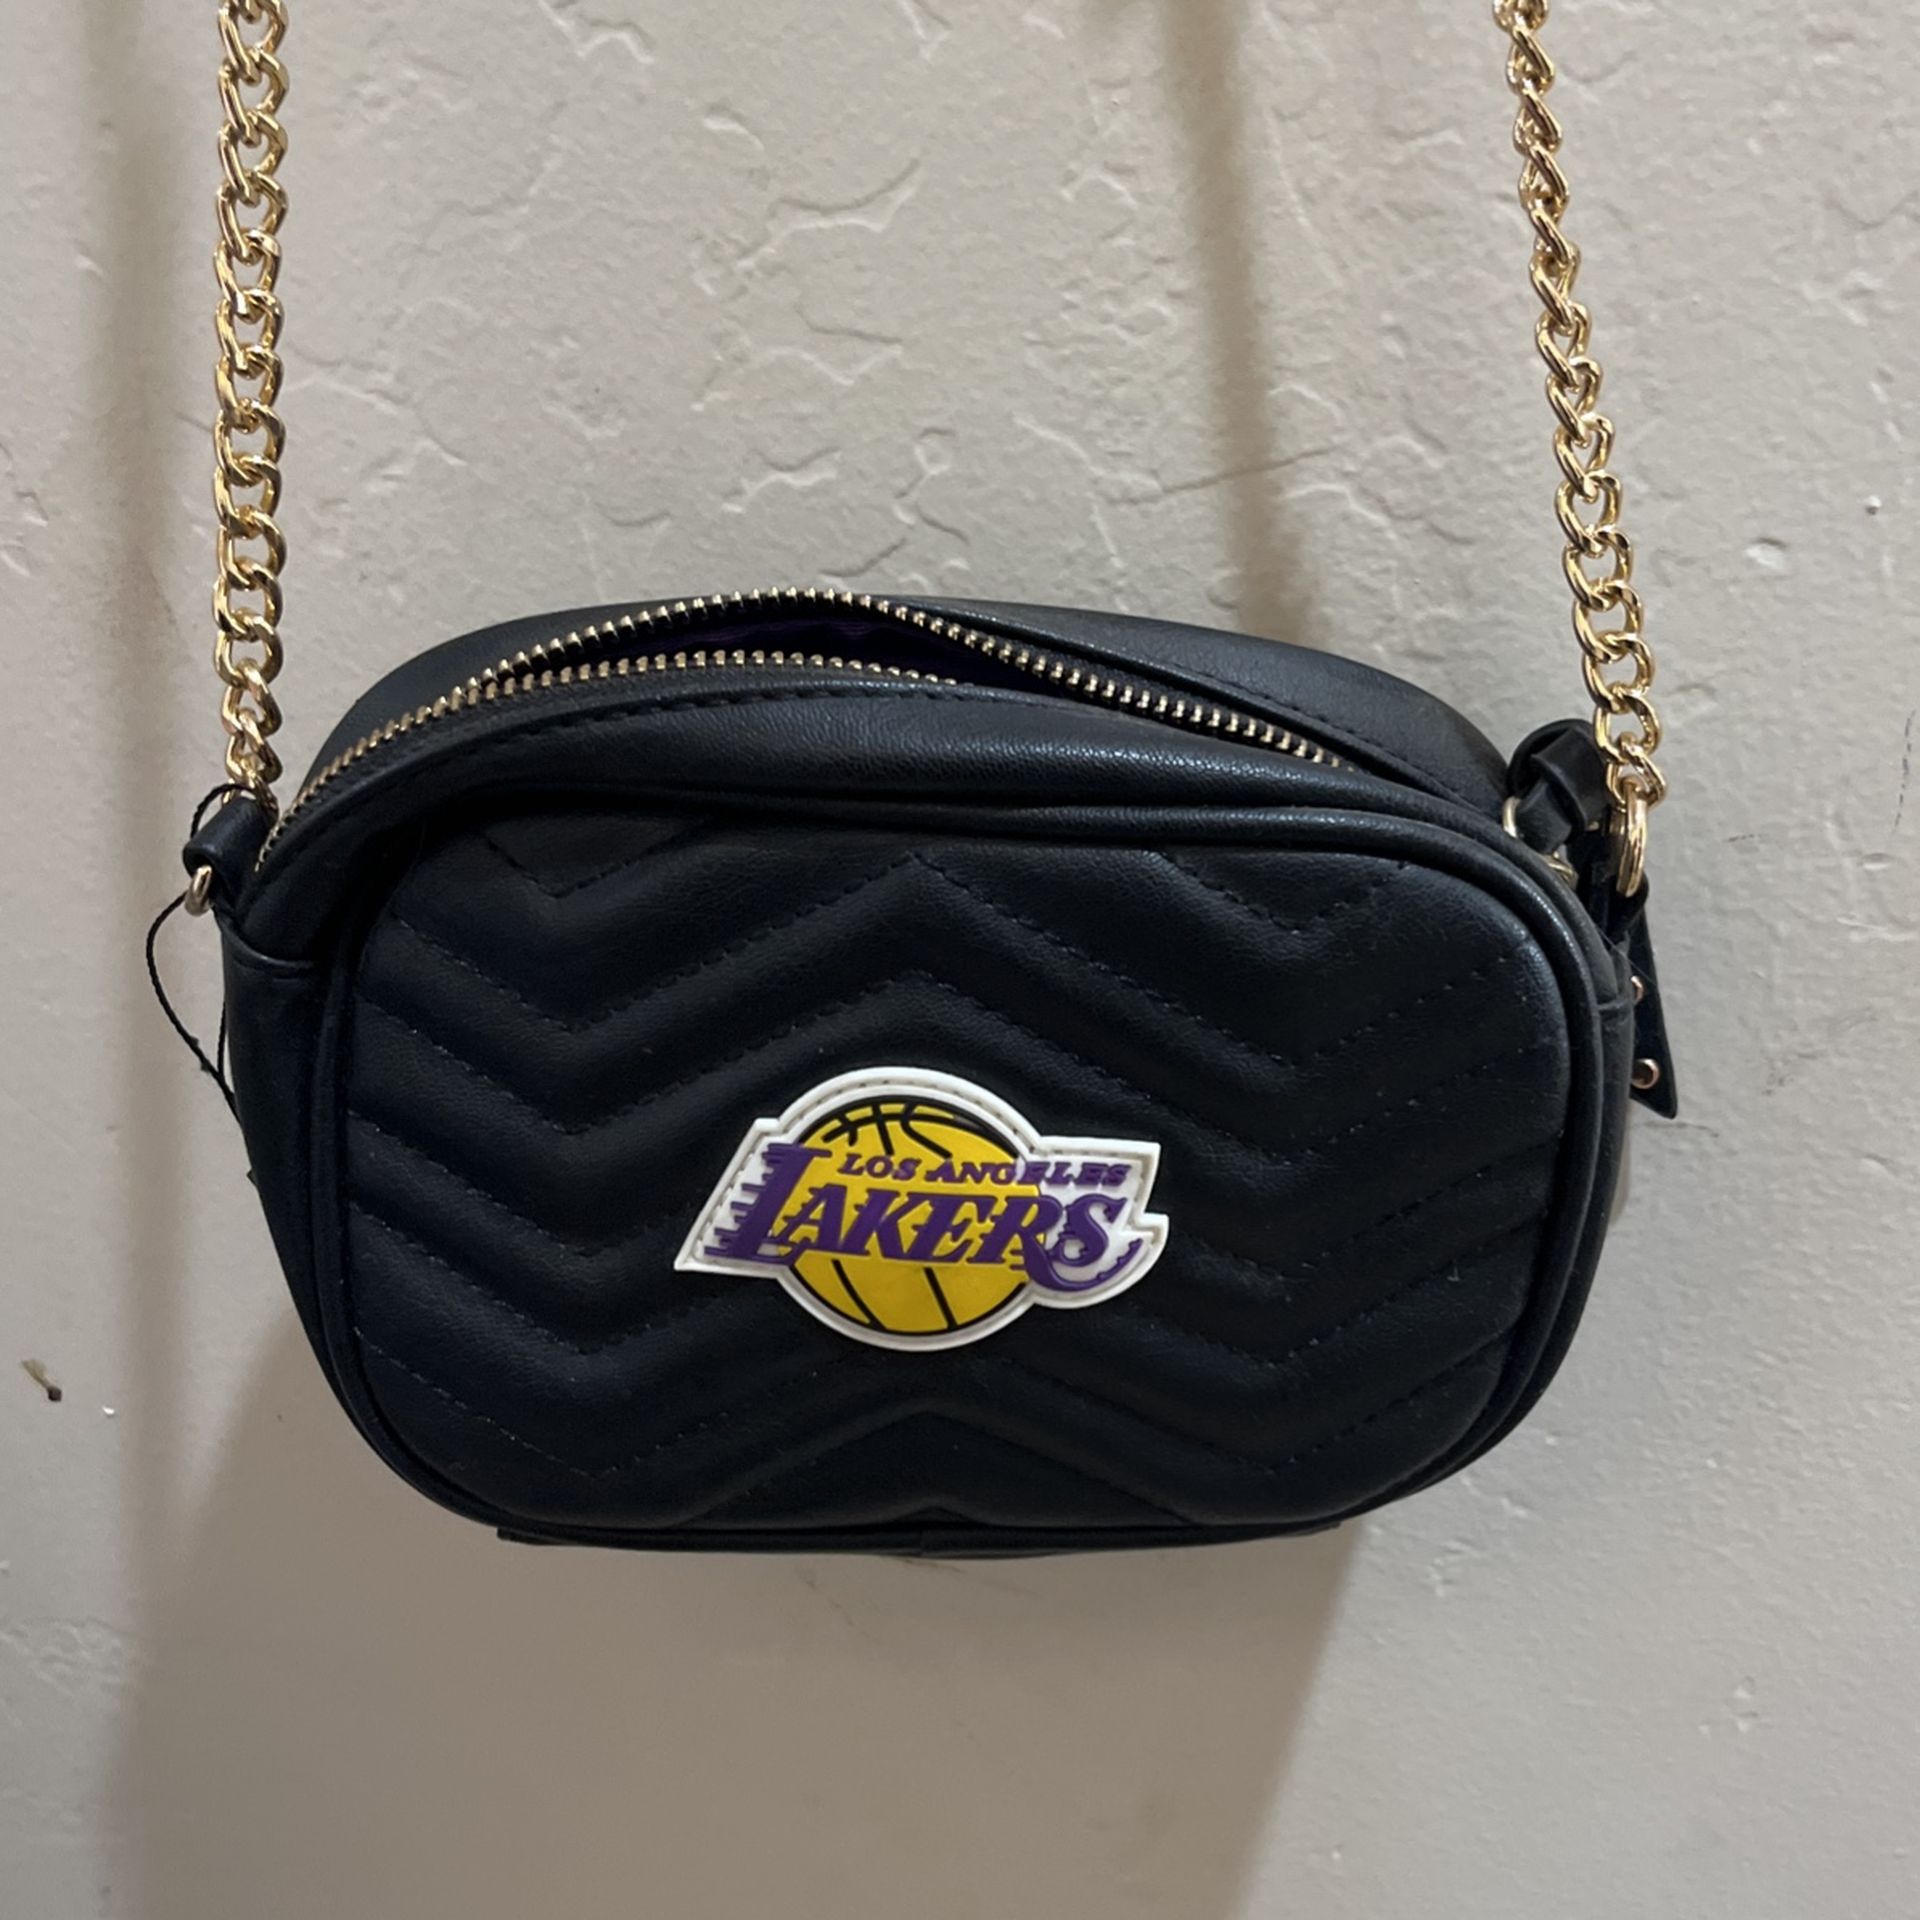 Lakers purse $20